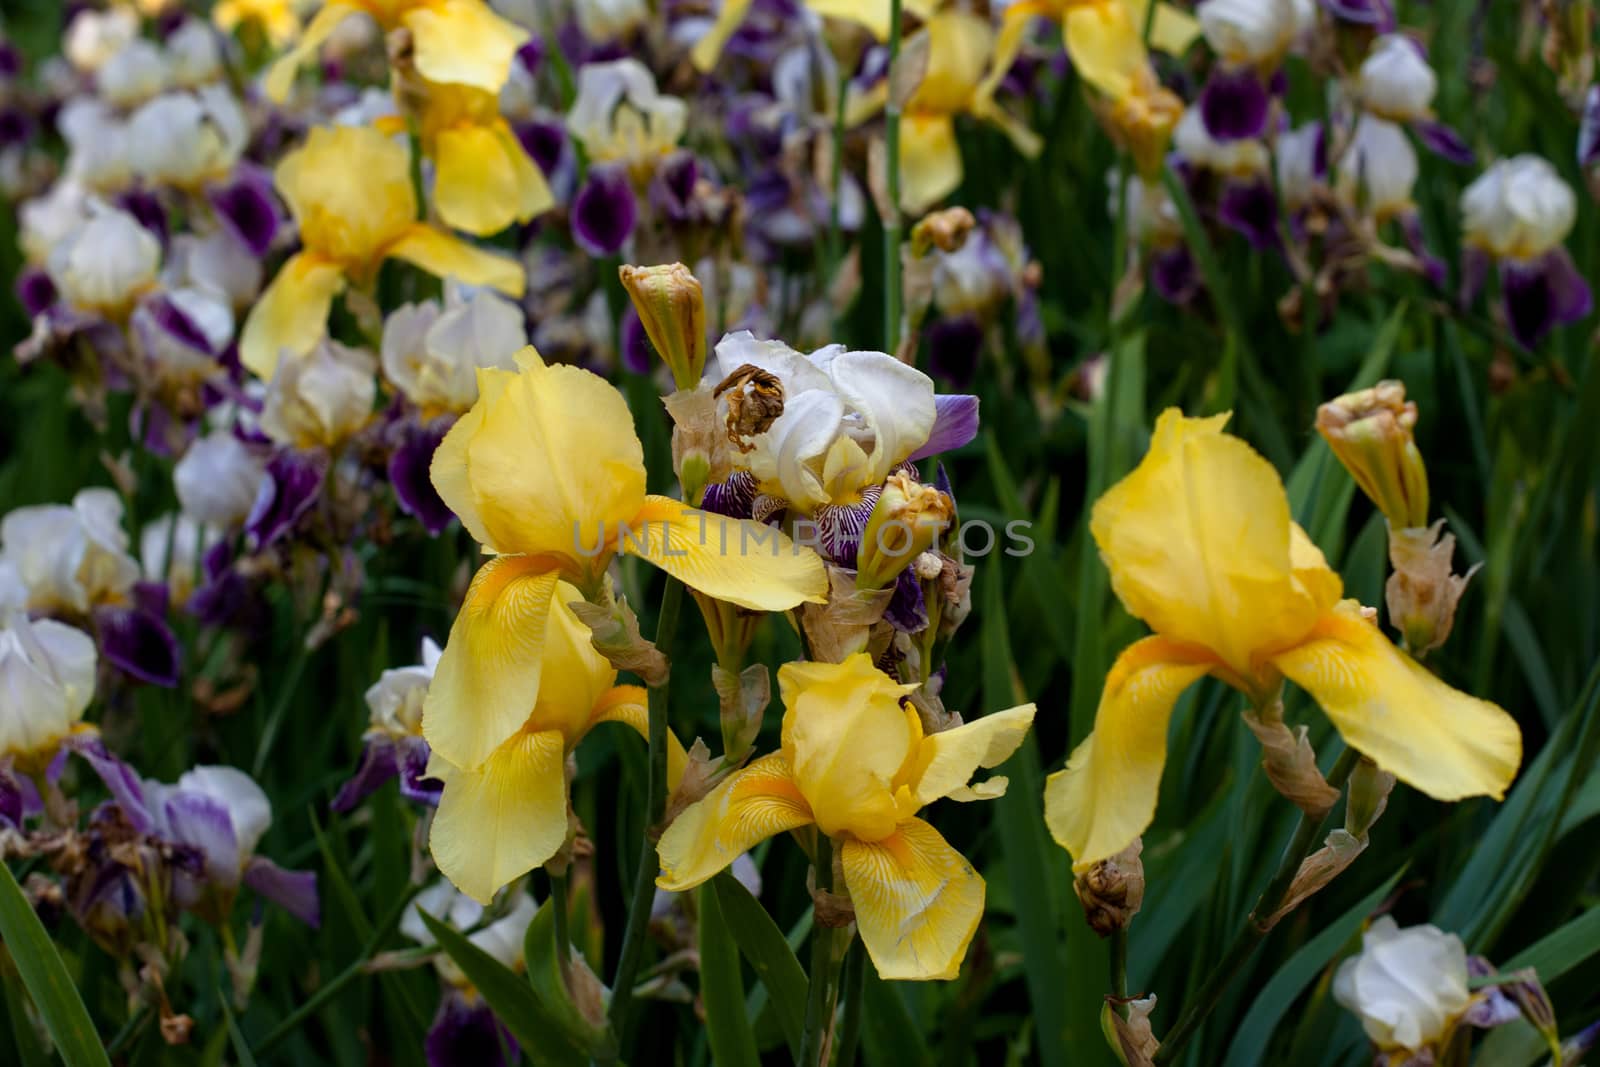 Yellow, white and purple irises in the garden
